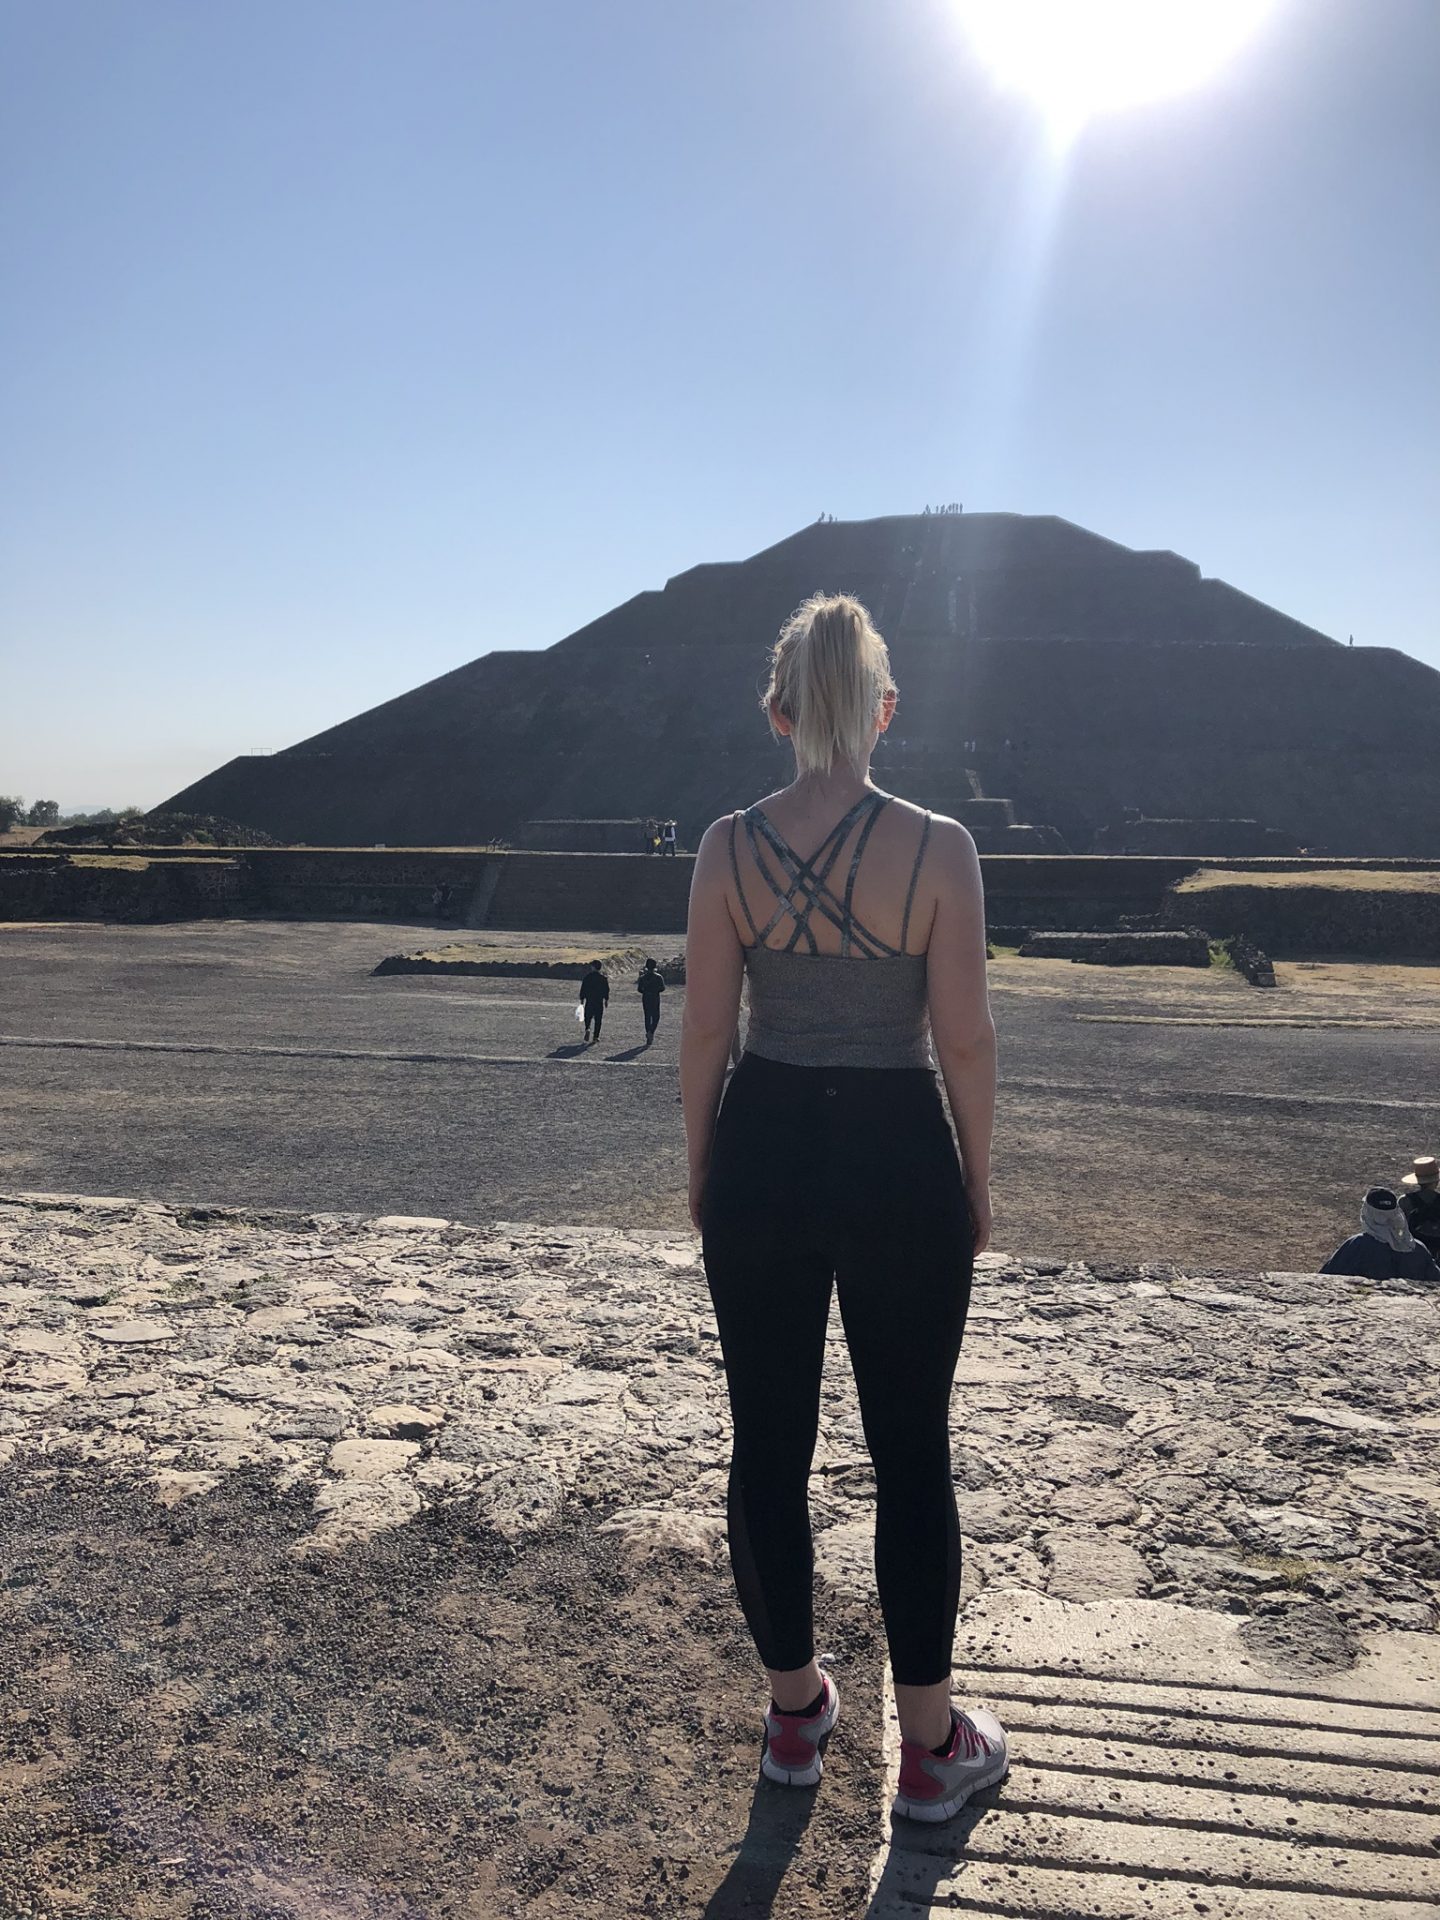 Laura at Teotihuacan, Mexico